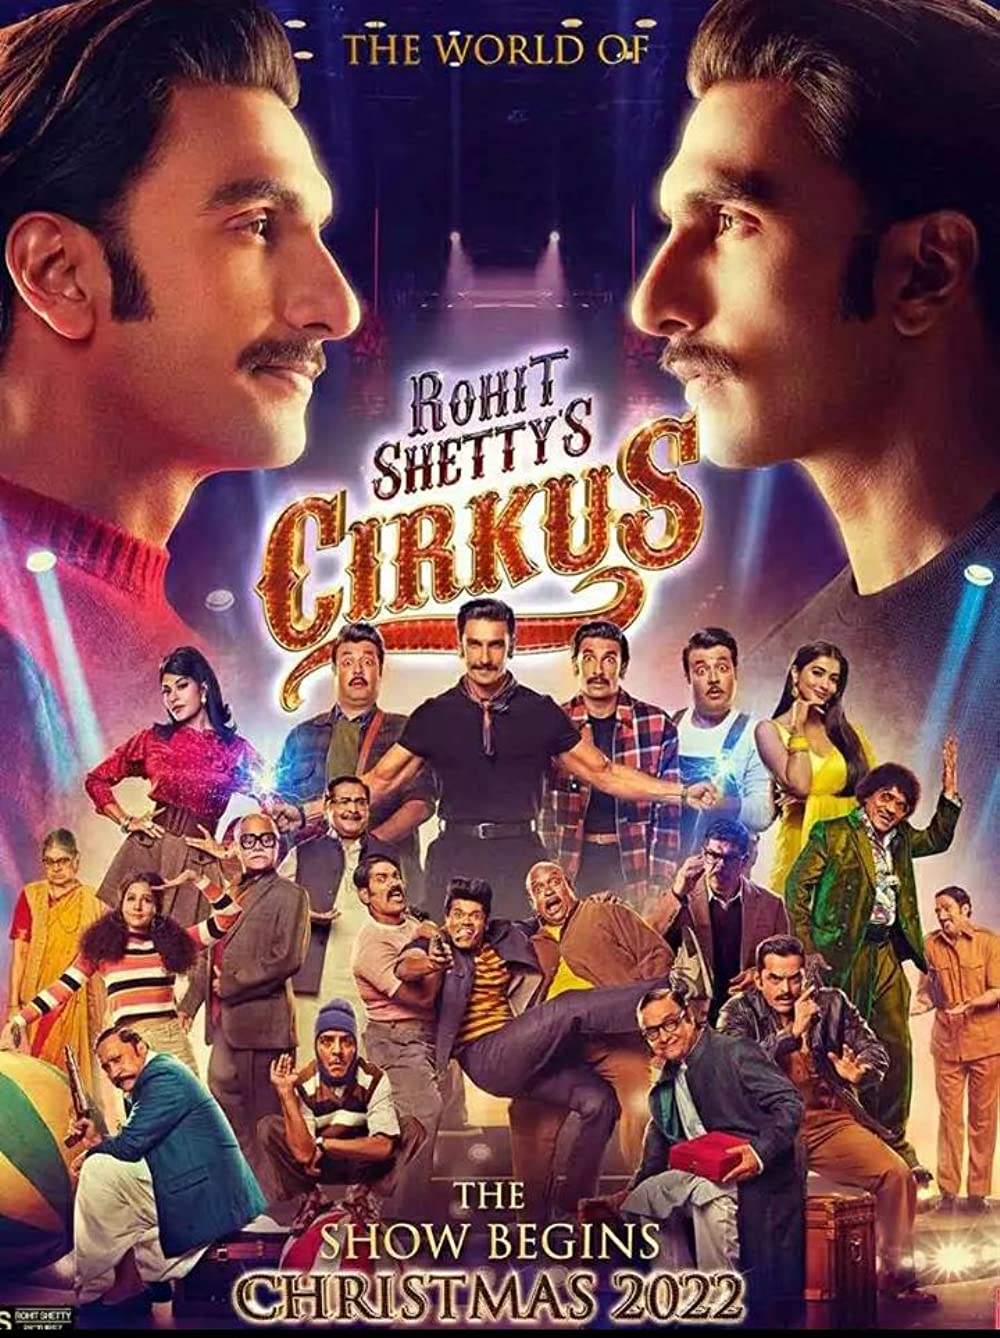 Cirkus Movie Review | Cirkus Filmy Rating 2022